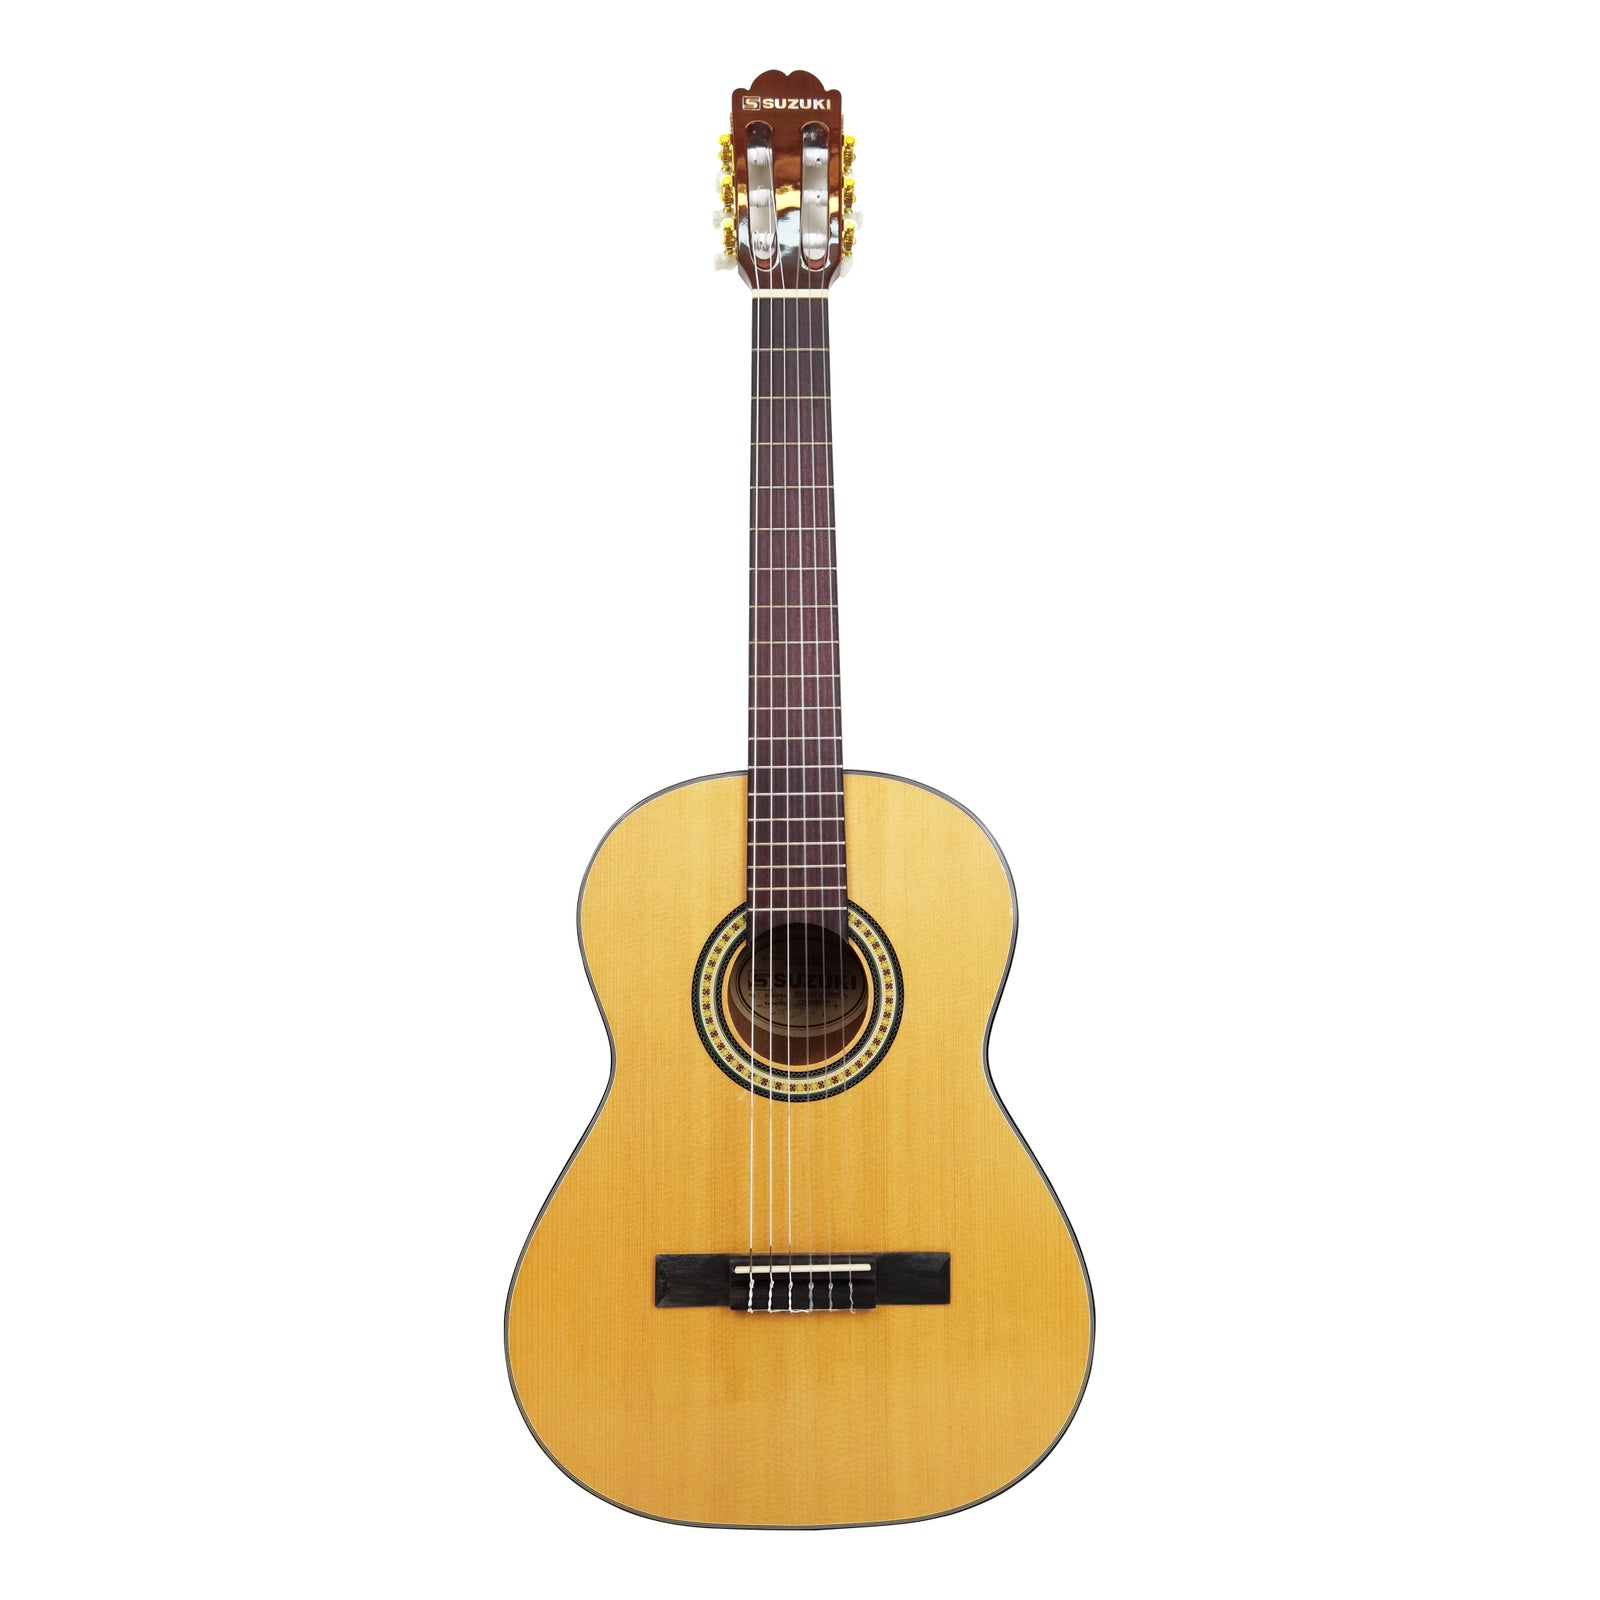 Suzuki SCG-11 Classical Guitar 4/4 size